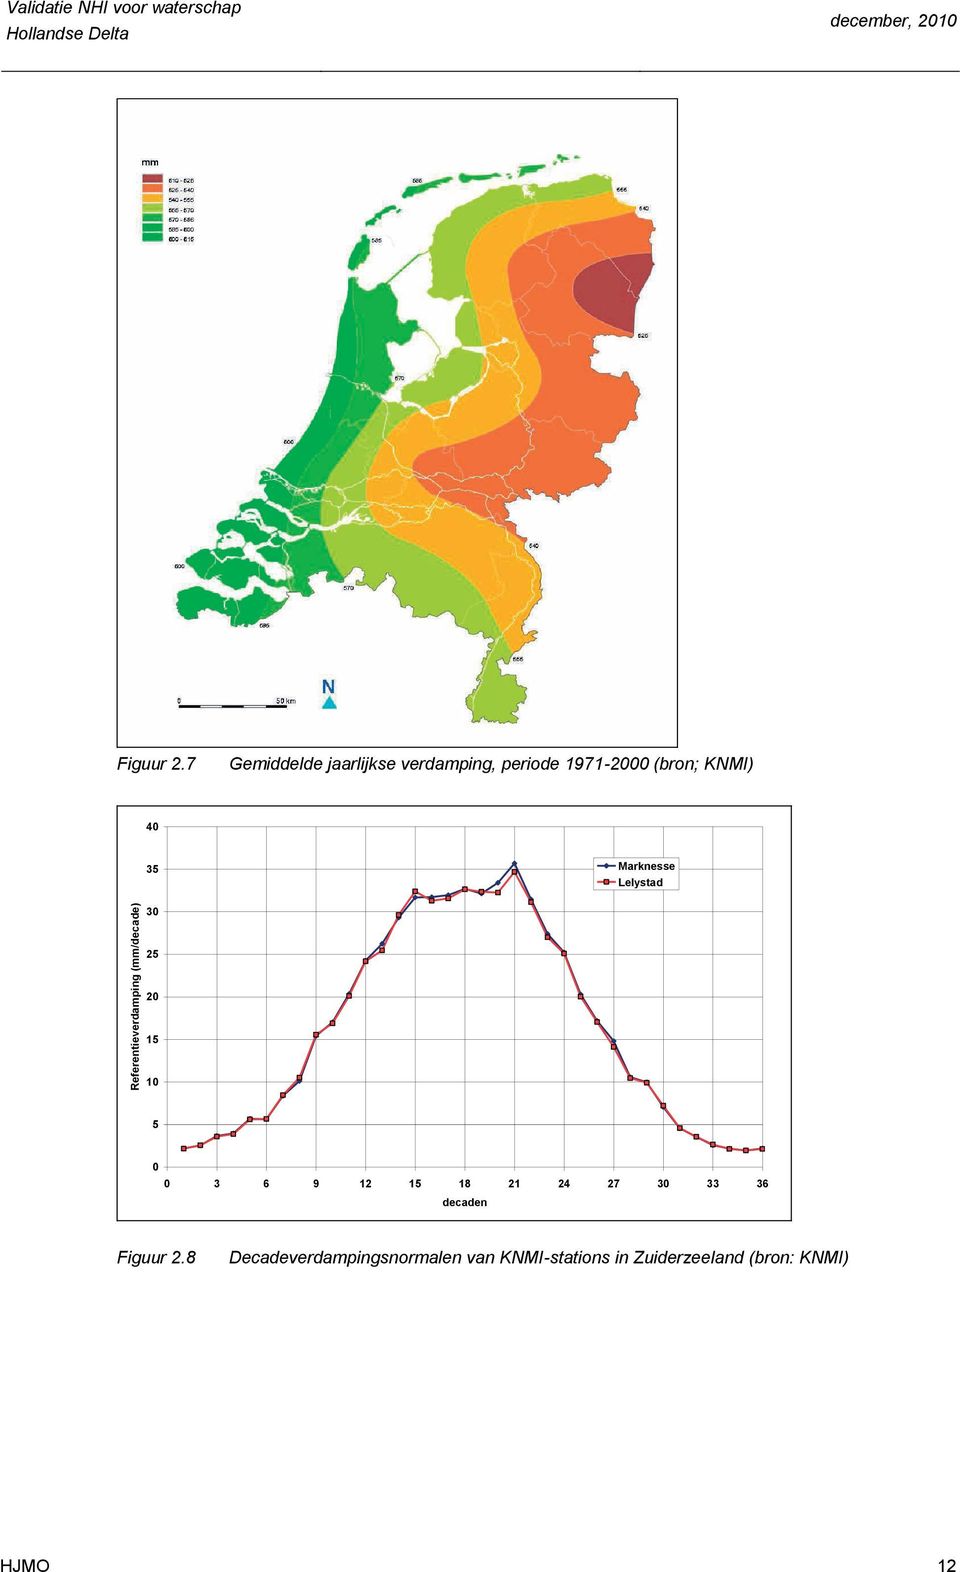 Marknesse Lelystad Referentieverdamping (mm/decade) 3 25 2 15 1 5 3